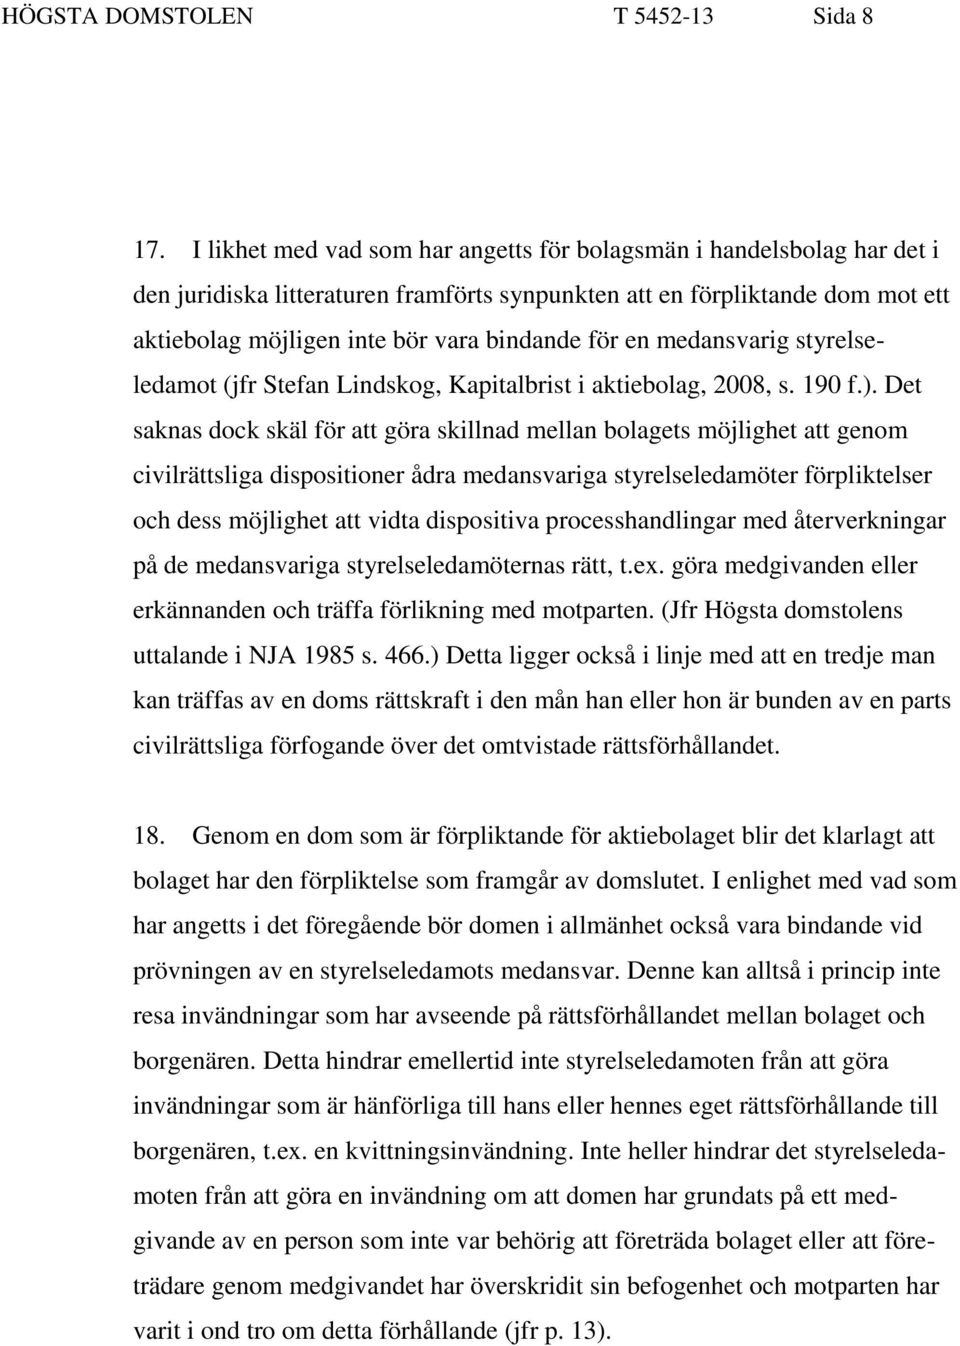 en medansvarig styrelseledamot (jfr Stefan Lindskog, Kapitalbrist i aktiebolag, 2008, s. 190 f.).